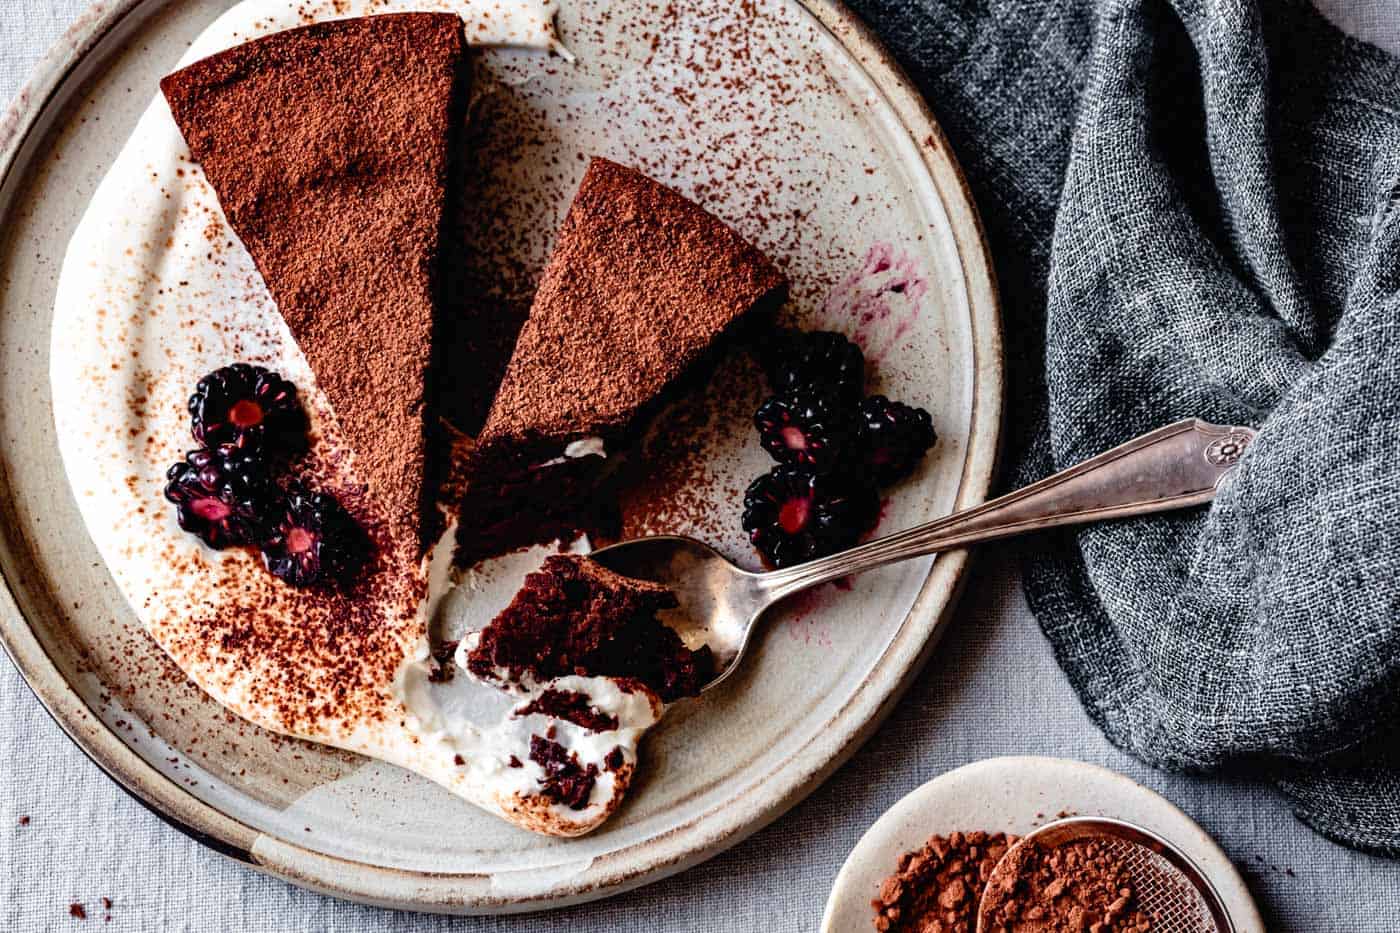 https://bojongourmet.com/wp-content/uploads/2020/10/almond-flour-chocolate-cake-gluten-free-dairy-free-15.jpg